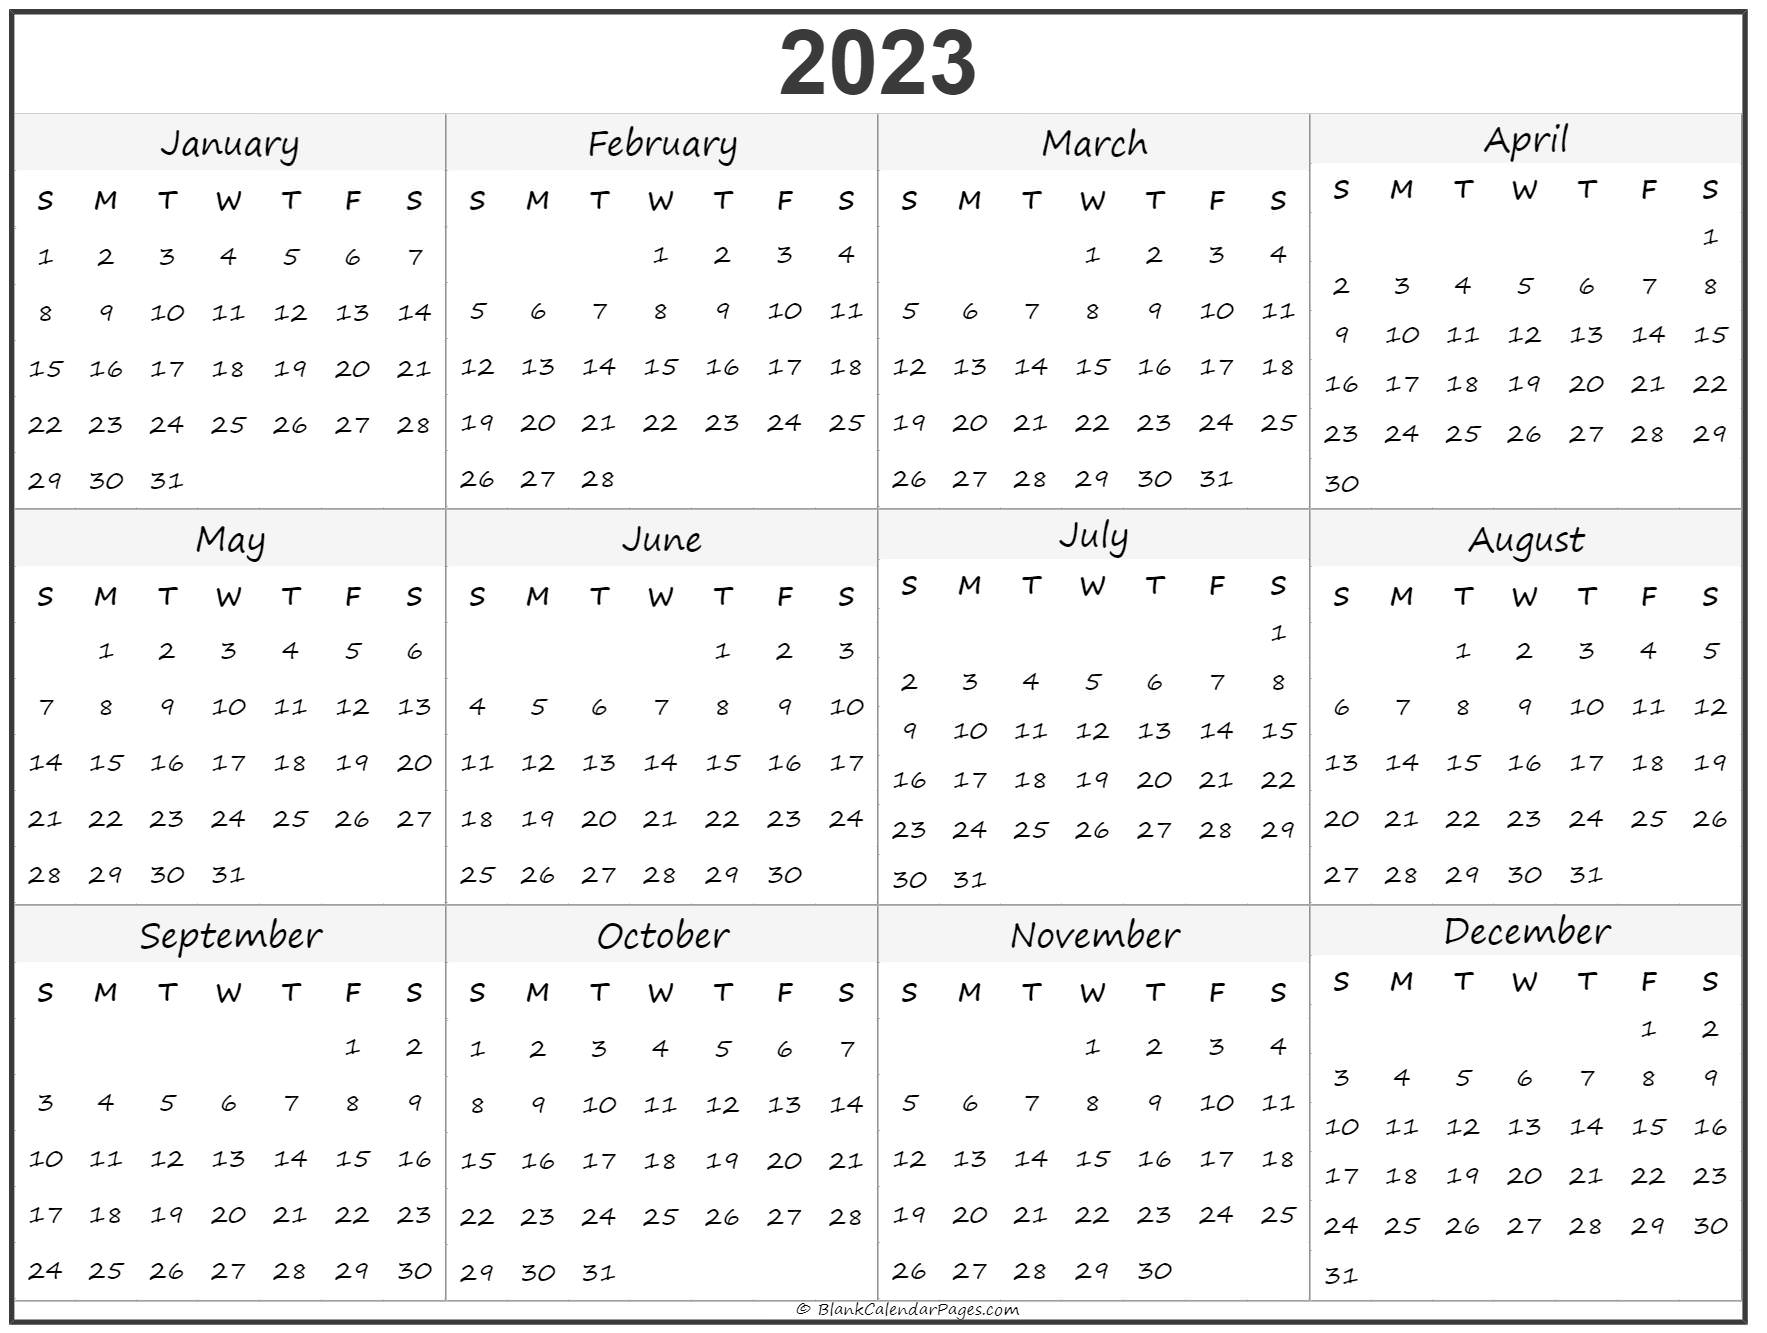 2023-calendar-pdf-word-excel-2023-calendar-templates-and-images-free-printable-2023-calendar